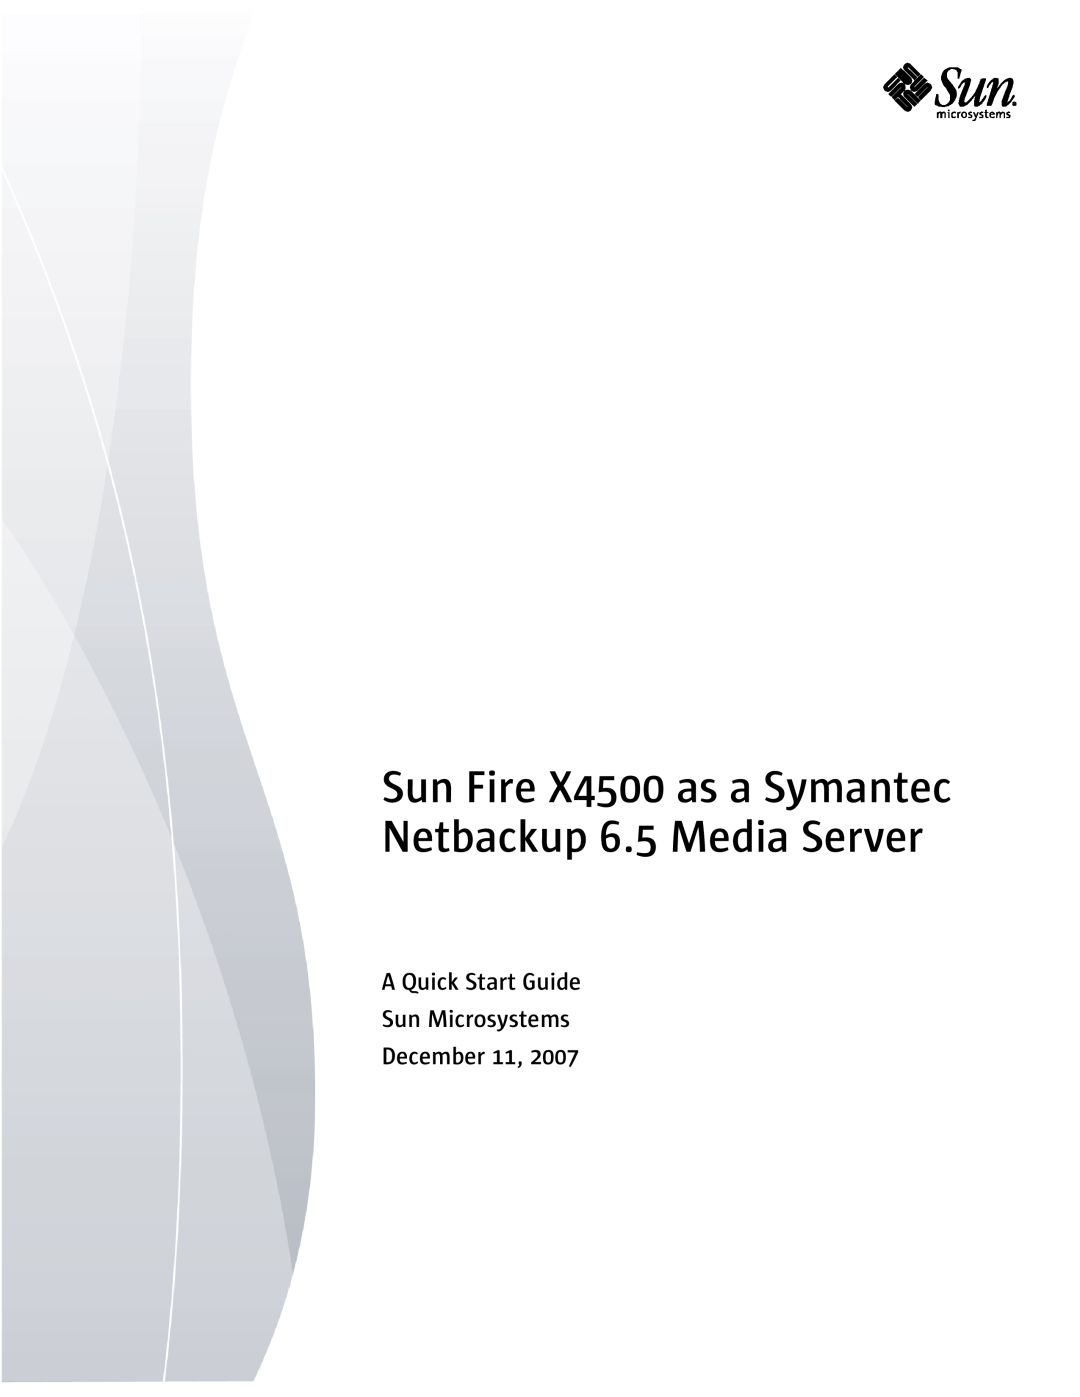 Sun Microsystems quick start Sun Fire X4500 as a Symantec Netbackup 6.5 Media Server 